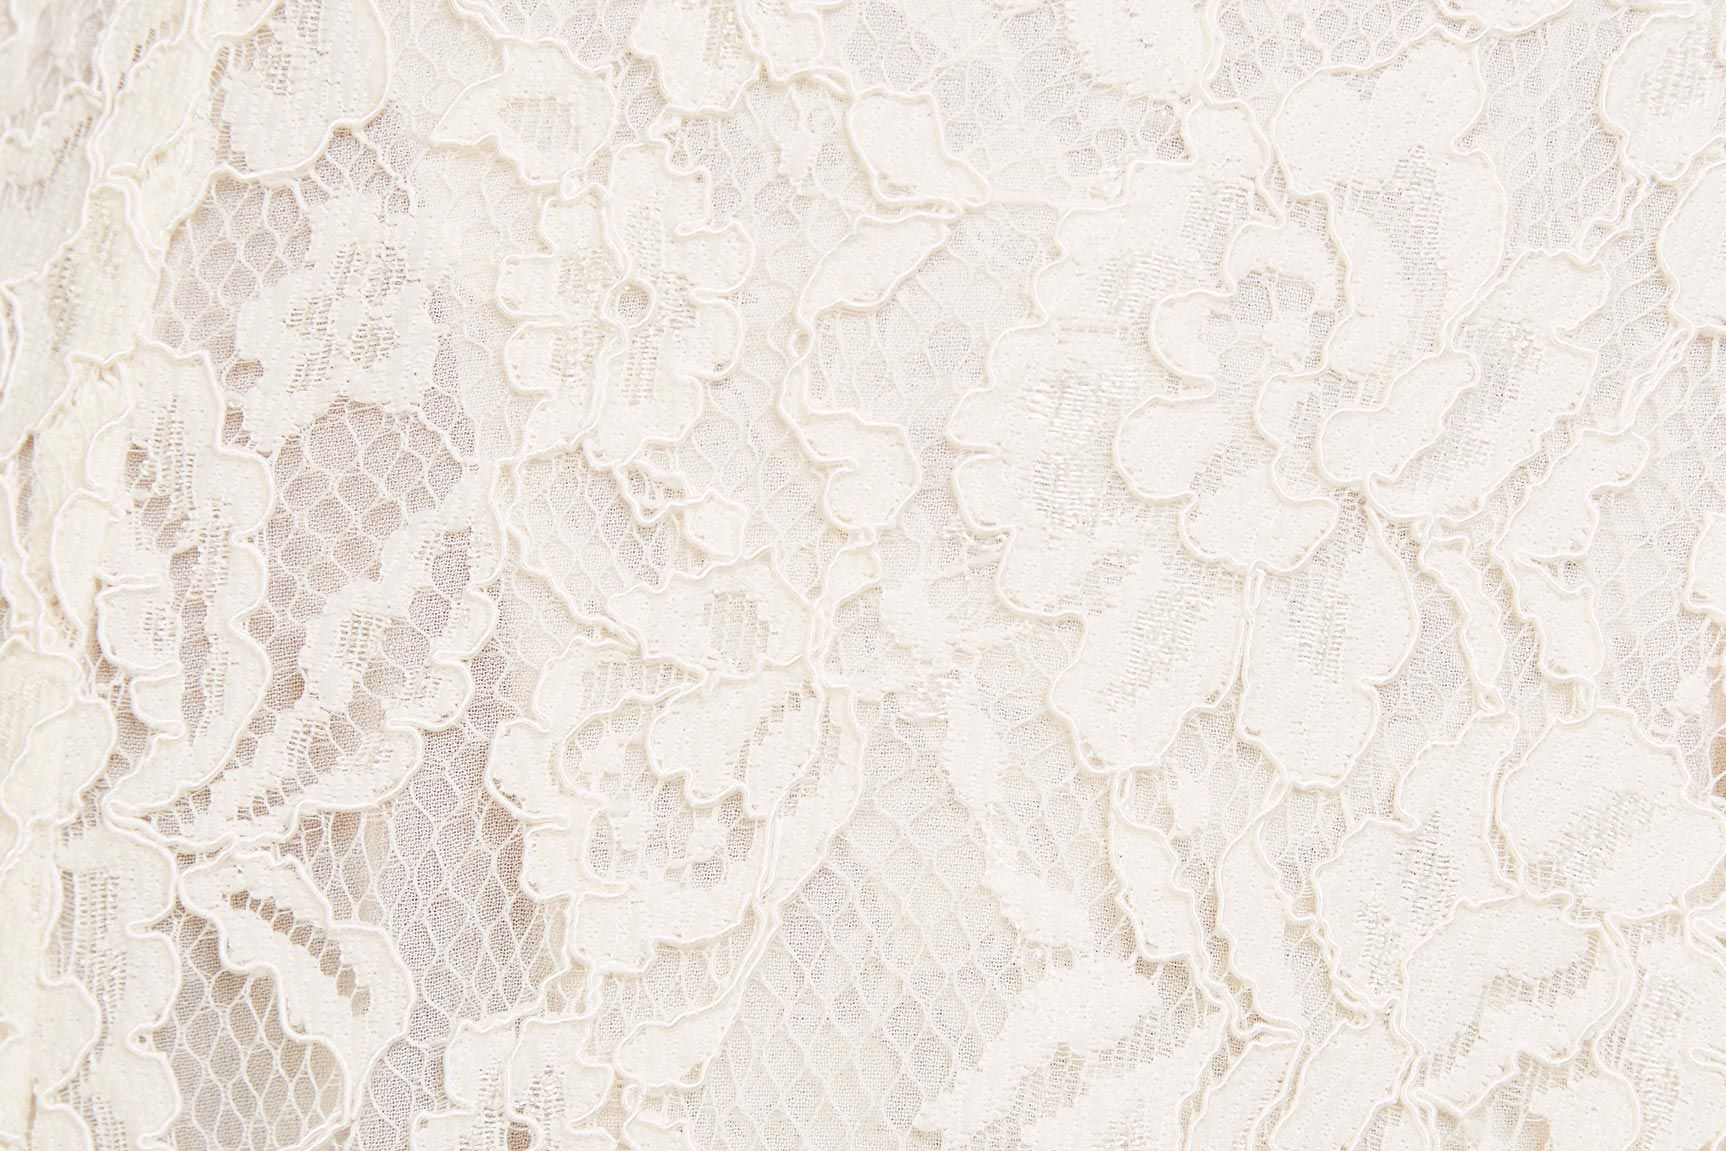 Lace White – Details Party Rental